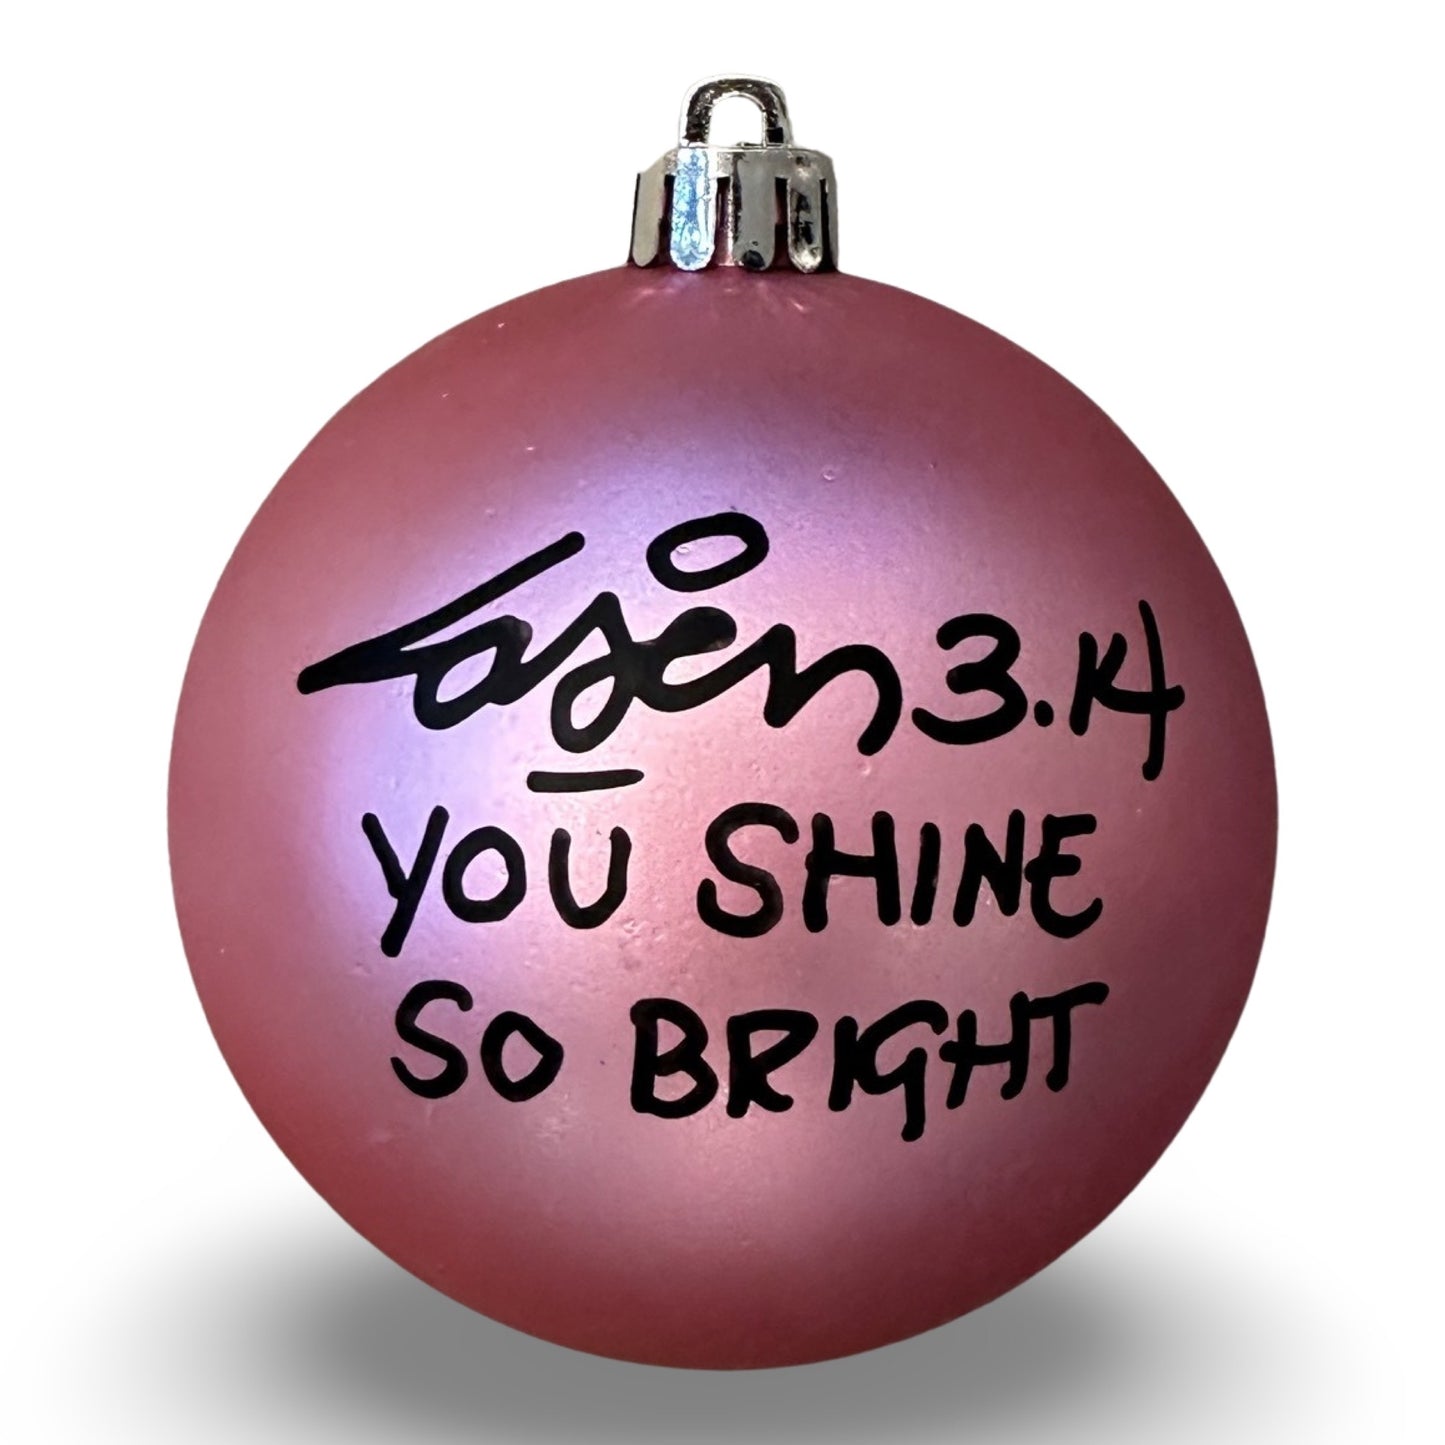 You Shine So Bright | Laser 3.14 x Famous Amsterdam Christmas Ball Ornament